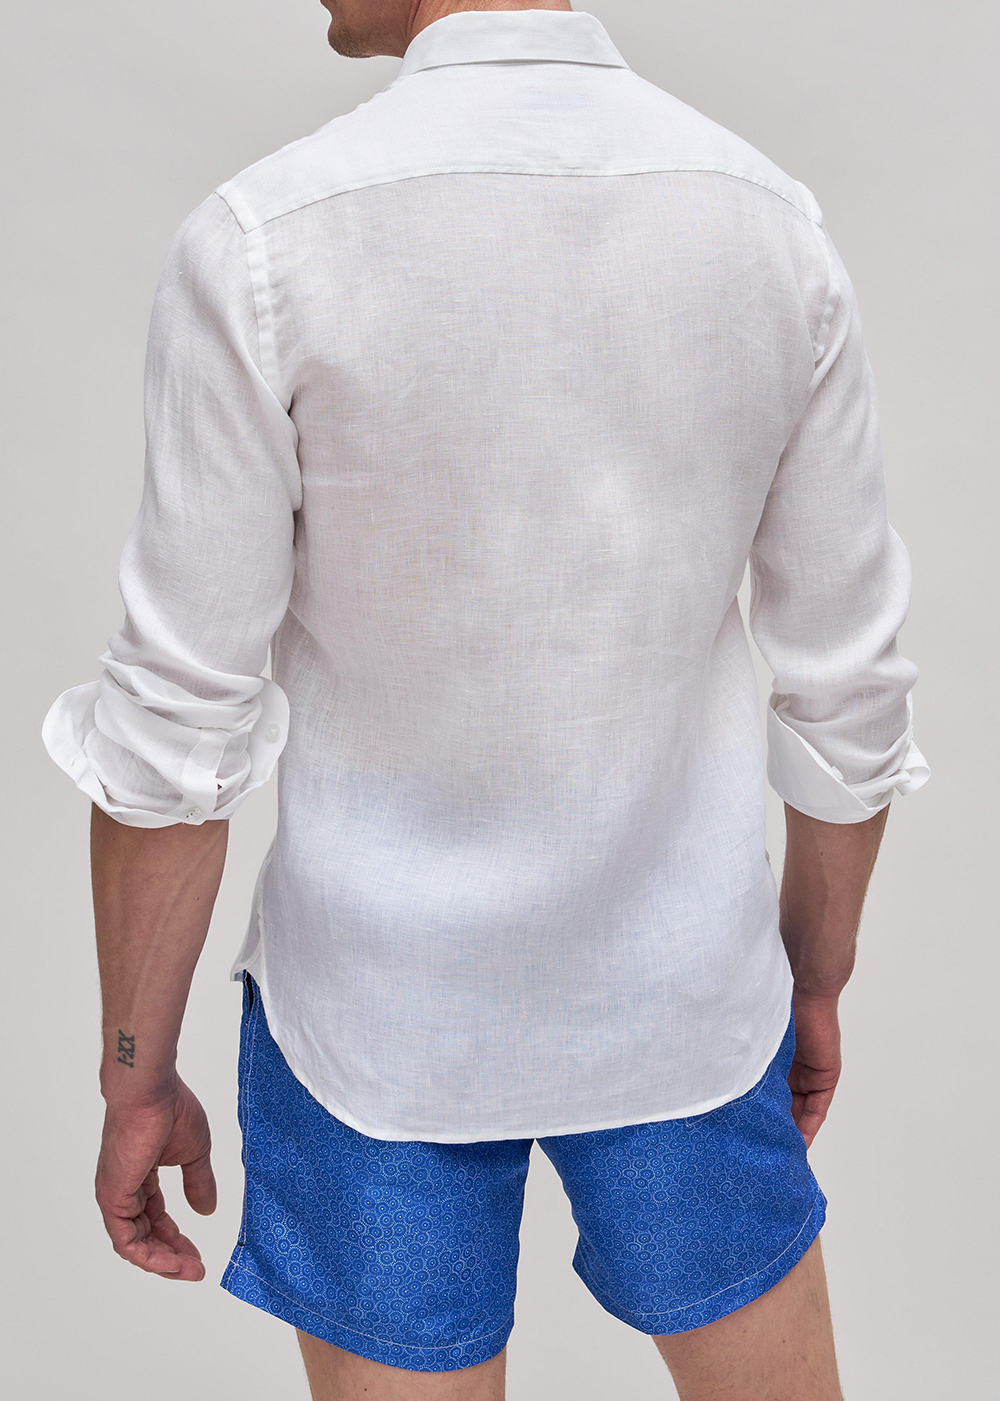 Linen Chambray Shirt - Patrick Assaraf - Danali